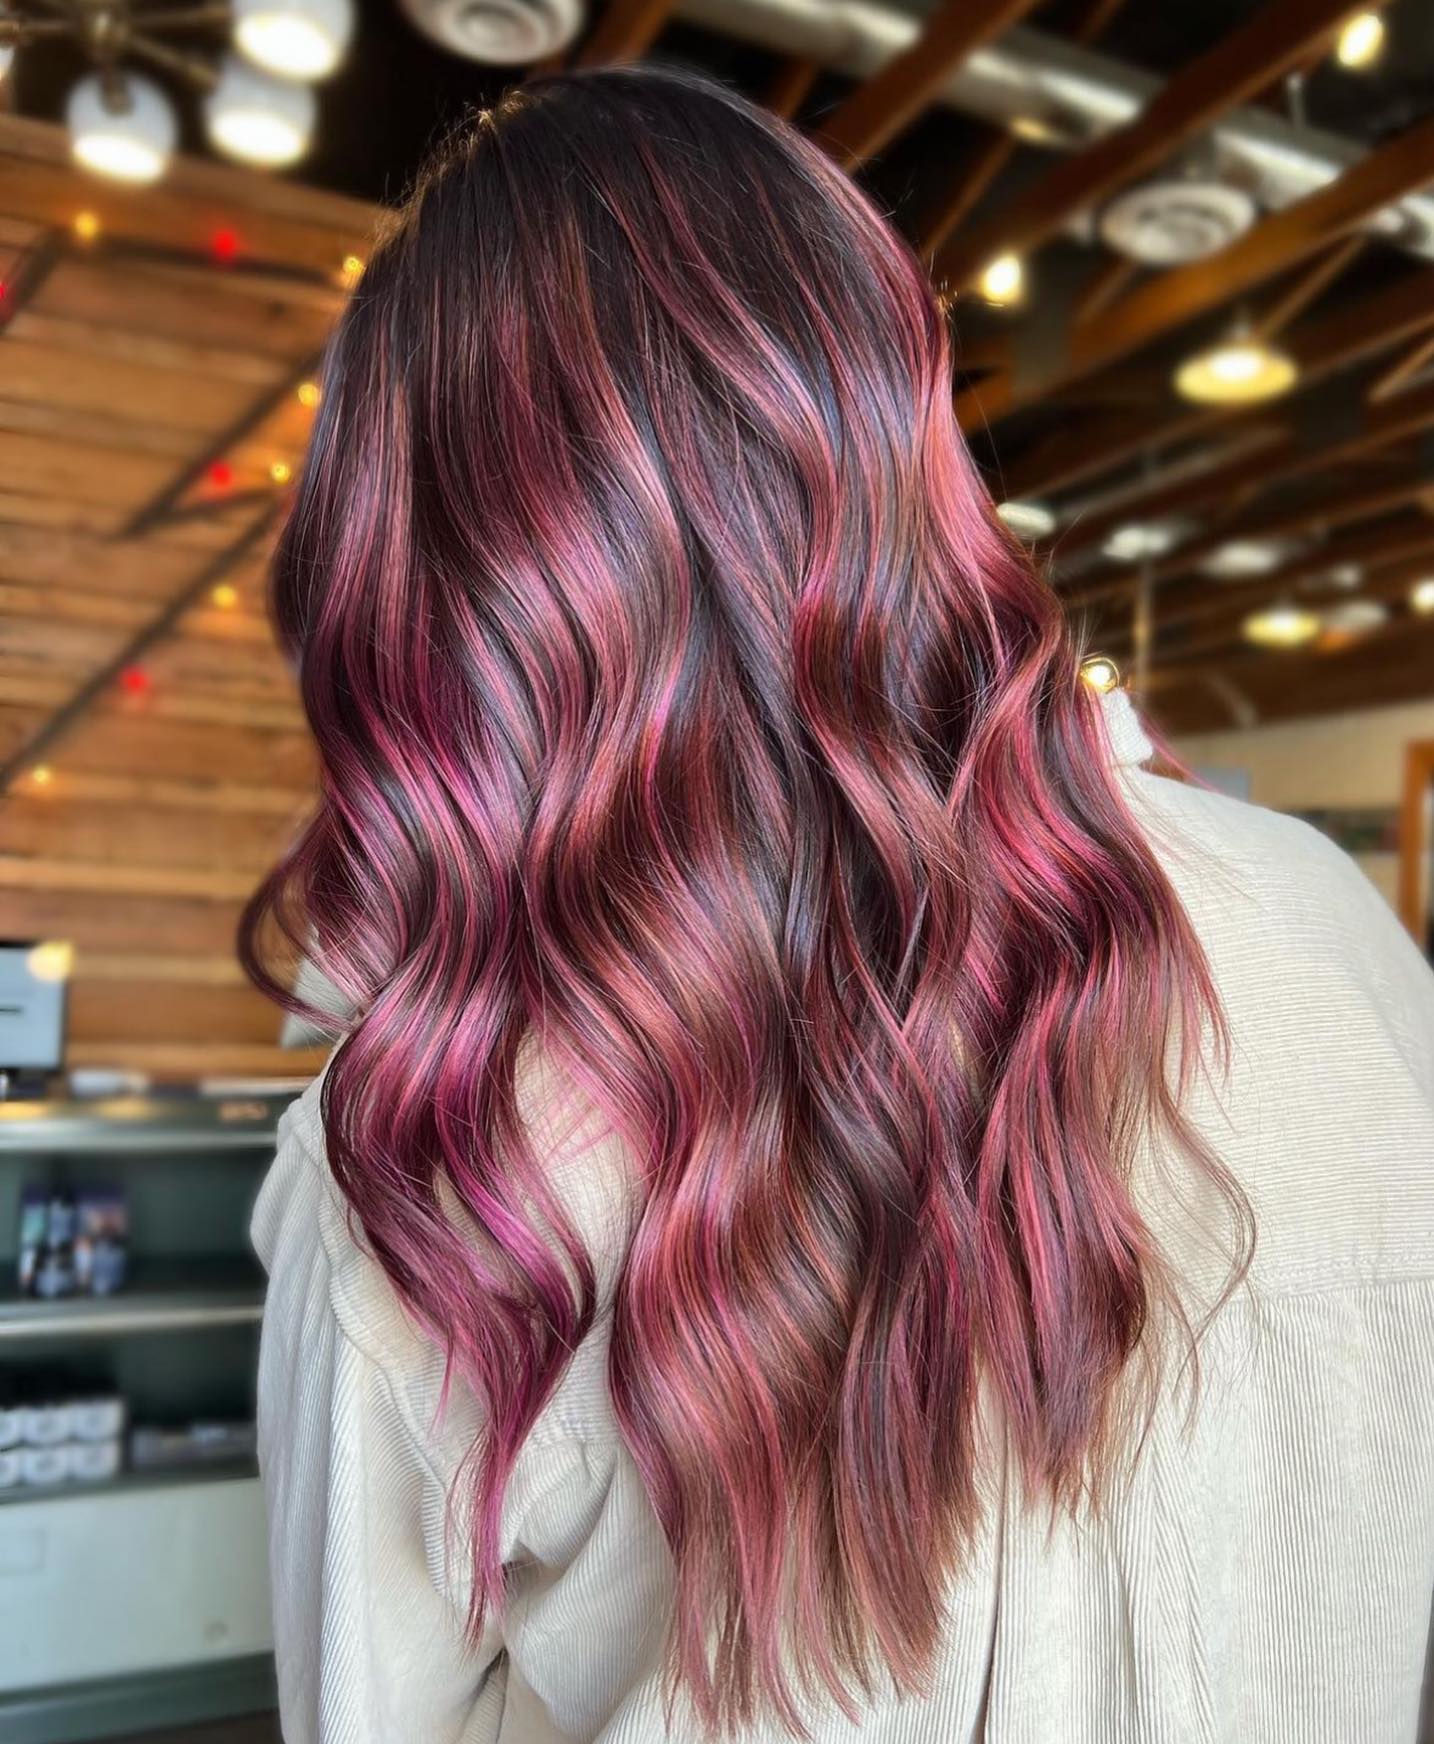 Reddish Pink Highlights on Long Wavy Hair